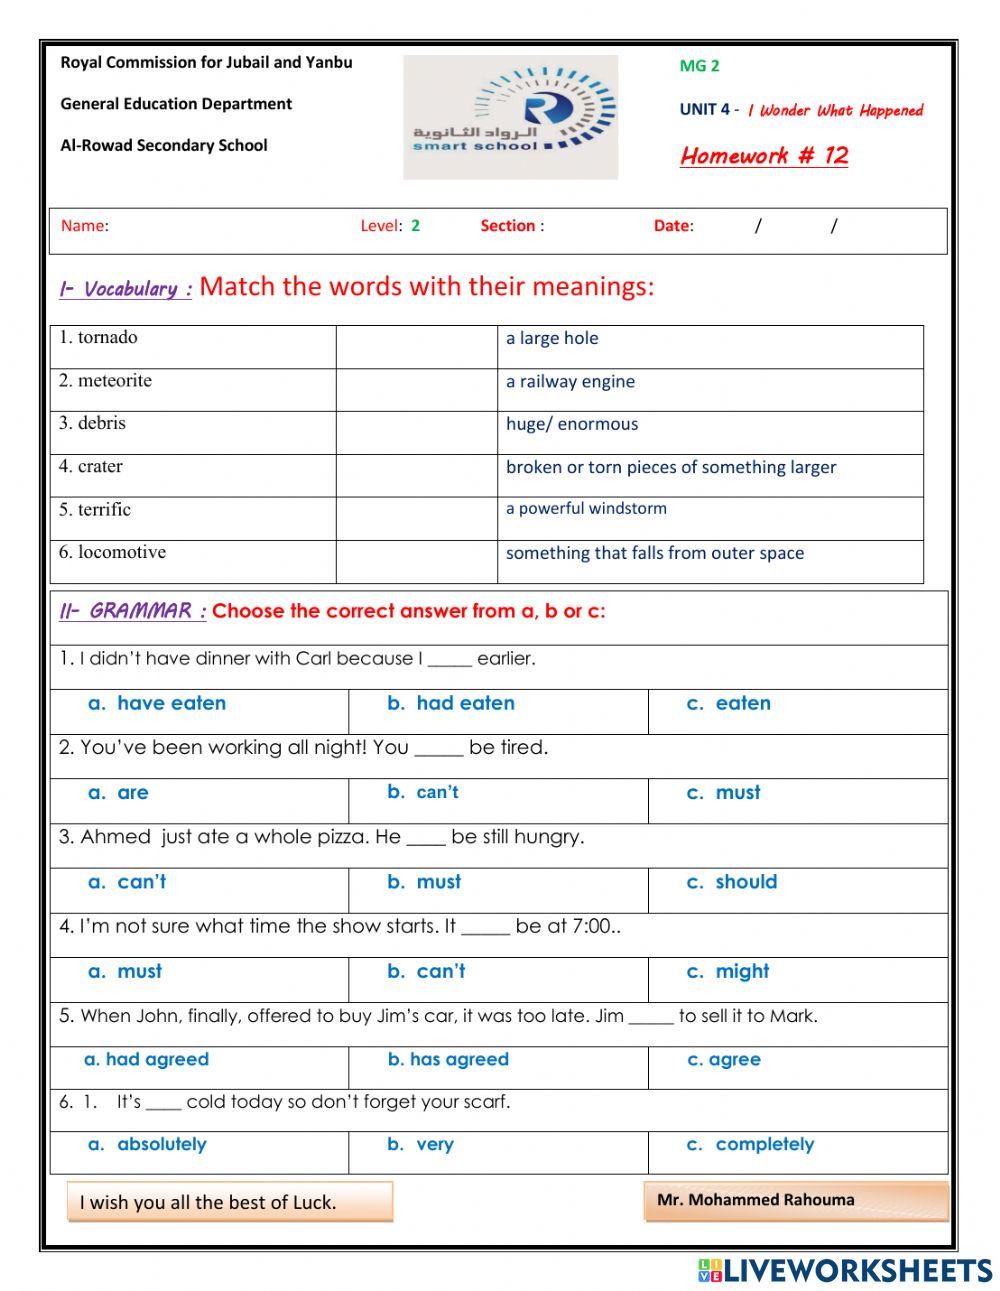 MG 2 - Unit 4- Vocabulary and Grammar Worksheet